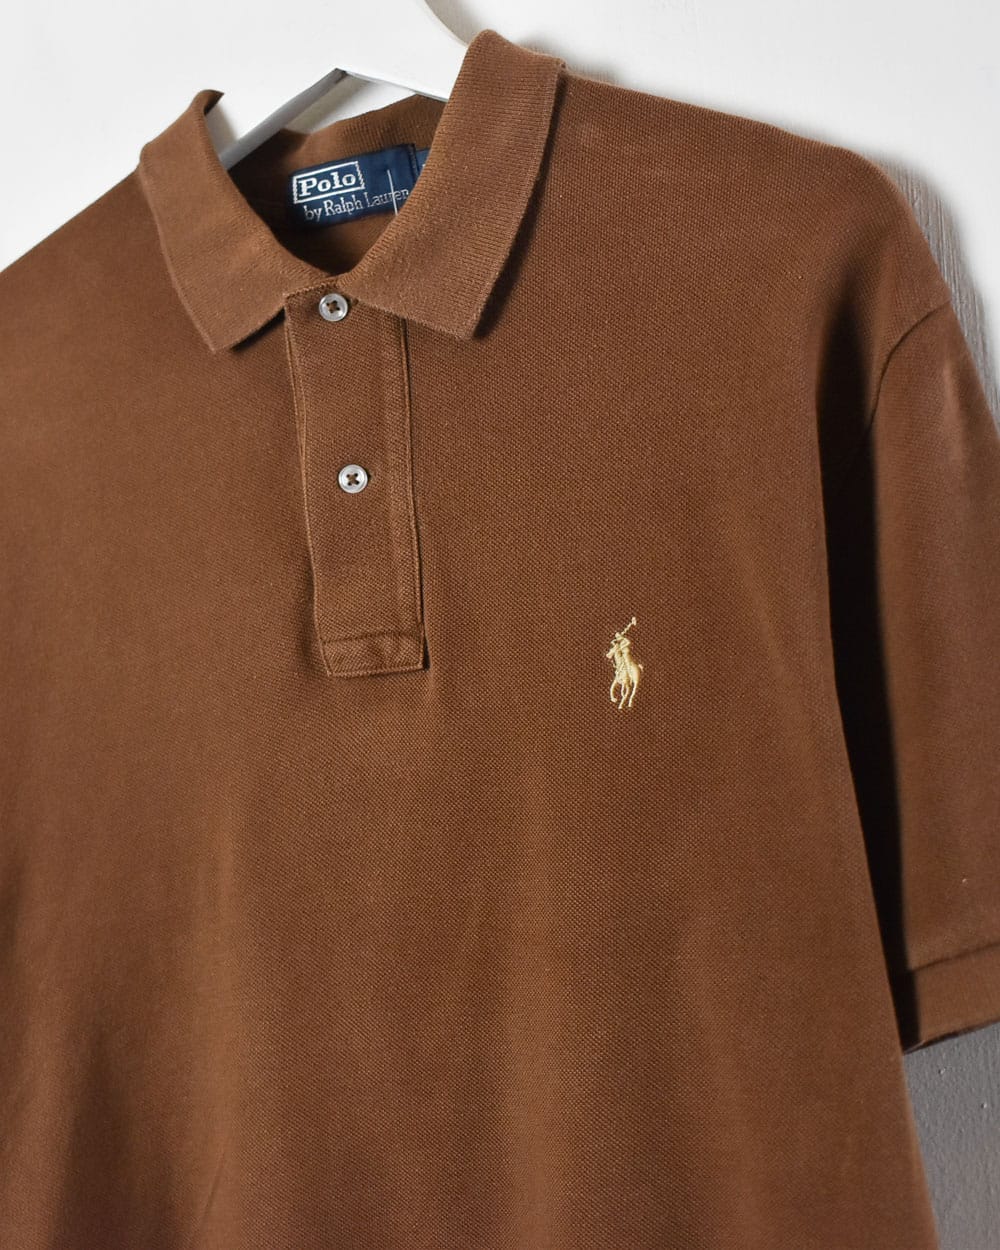 Brown Polo Ralph Lauren Polo Shirt - Medium